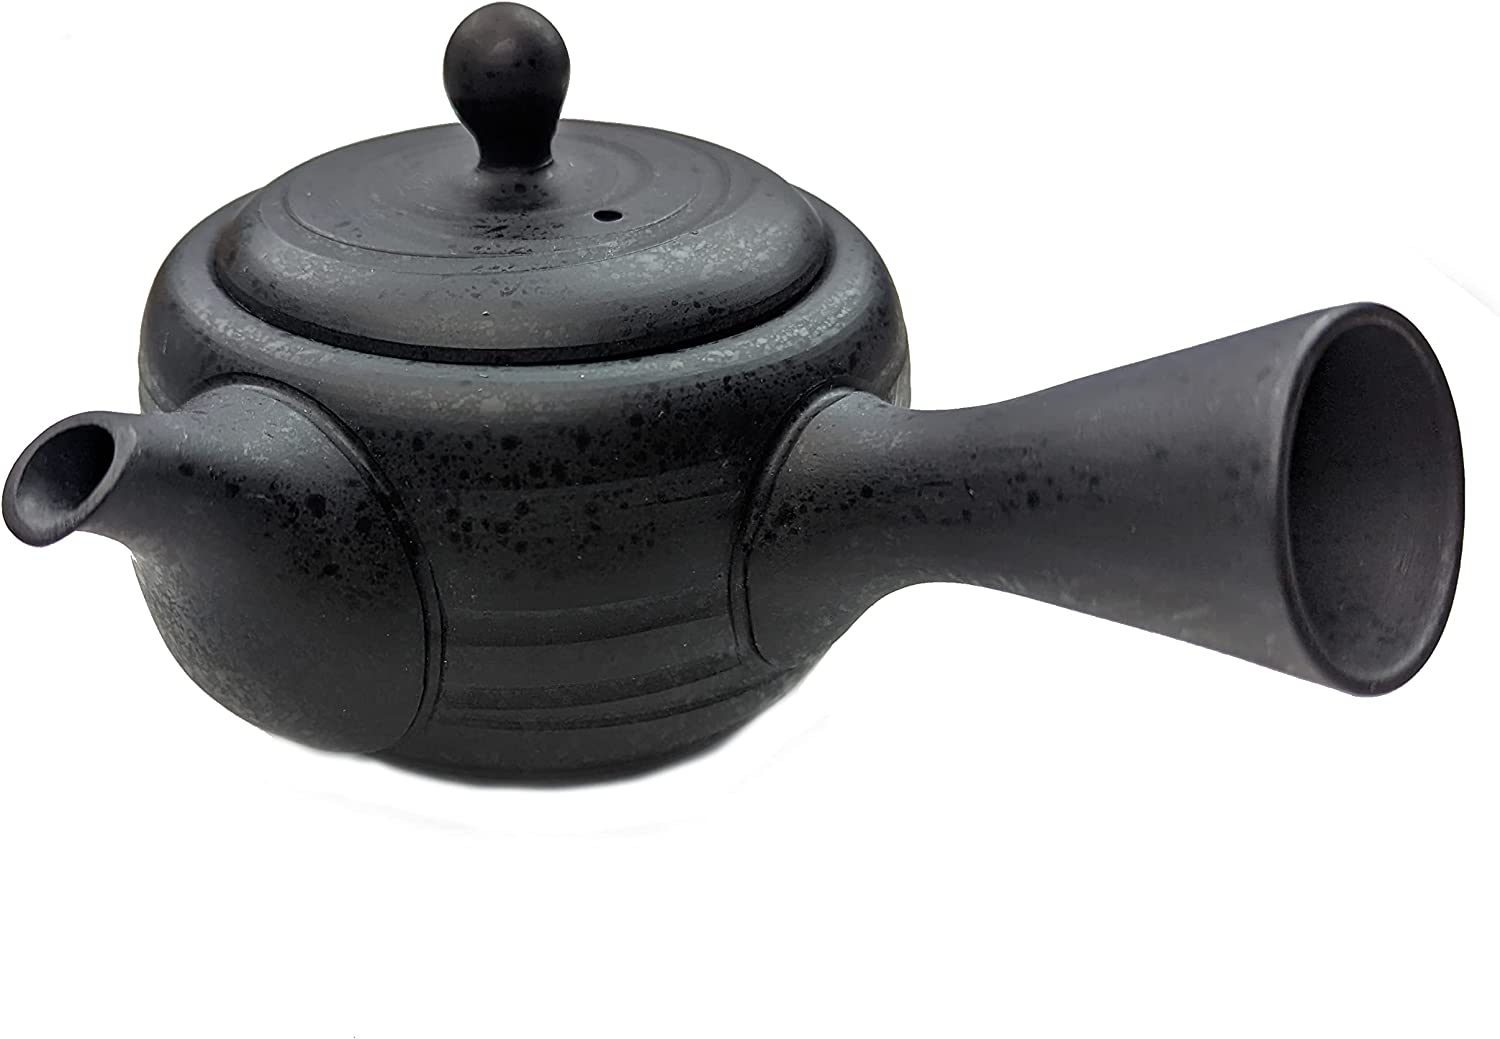 Kyusu Japanese Ceramic Teapot with Stainless Steel Tea Strainer, Japan One-Handed Teapot Black 200 ml